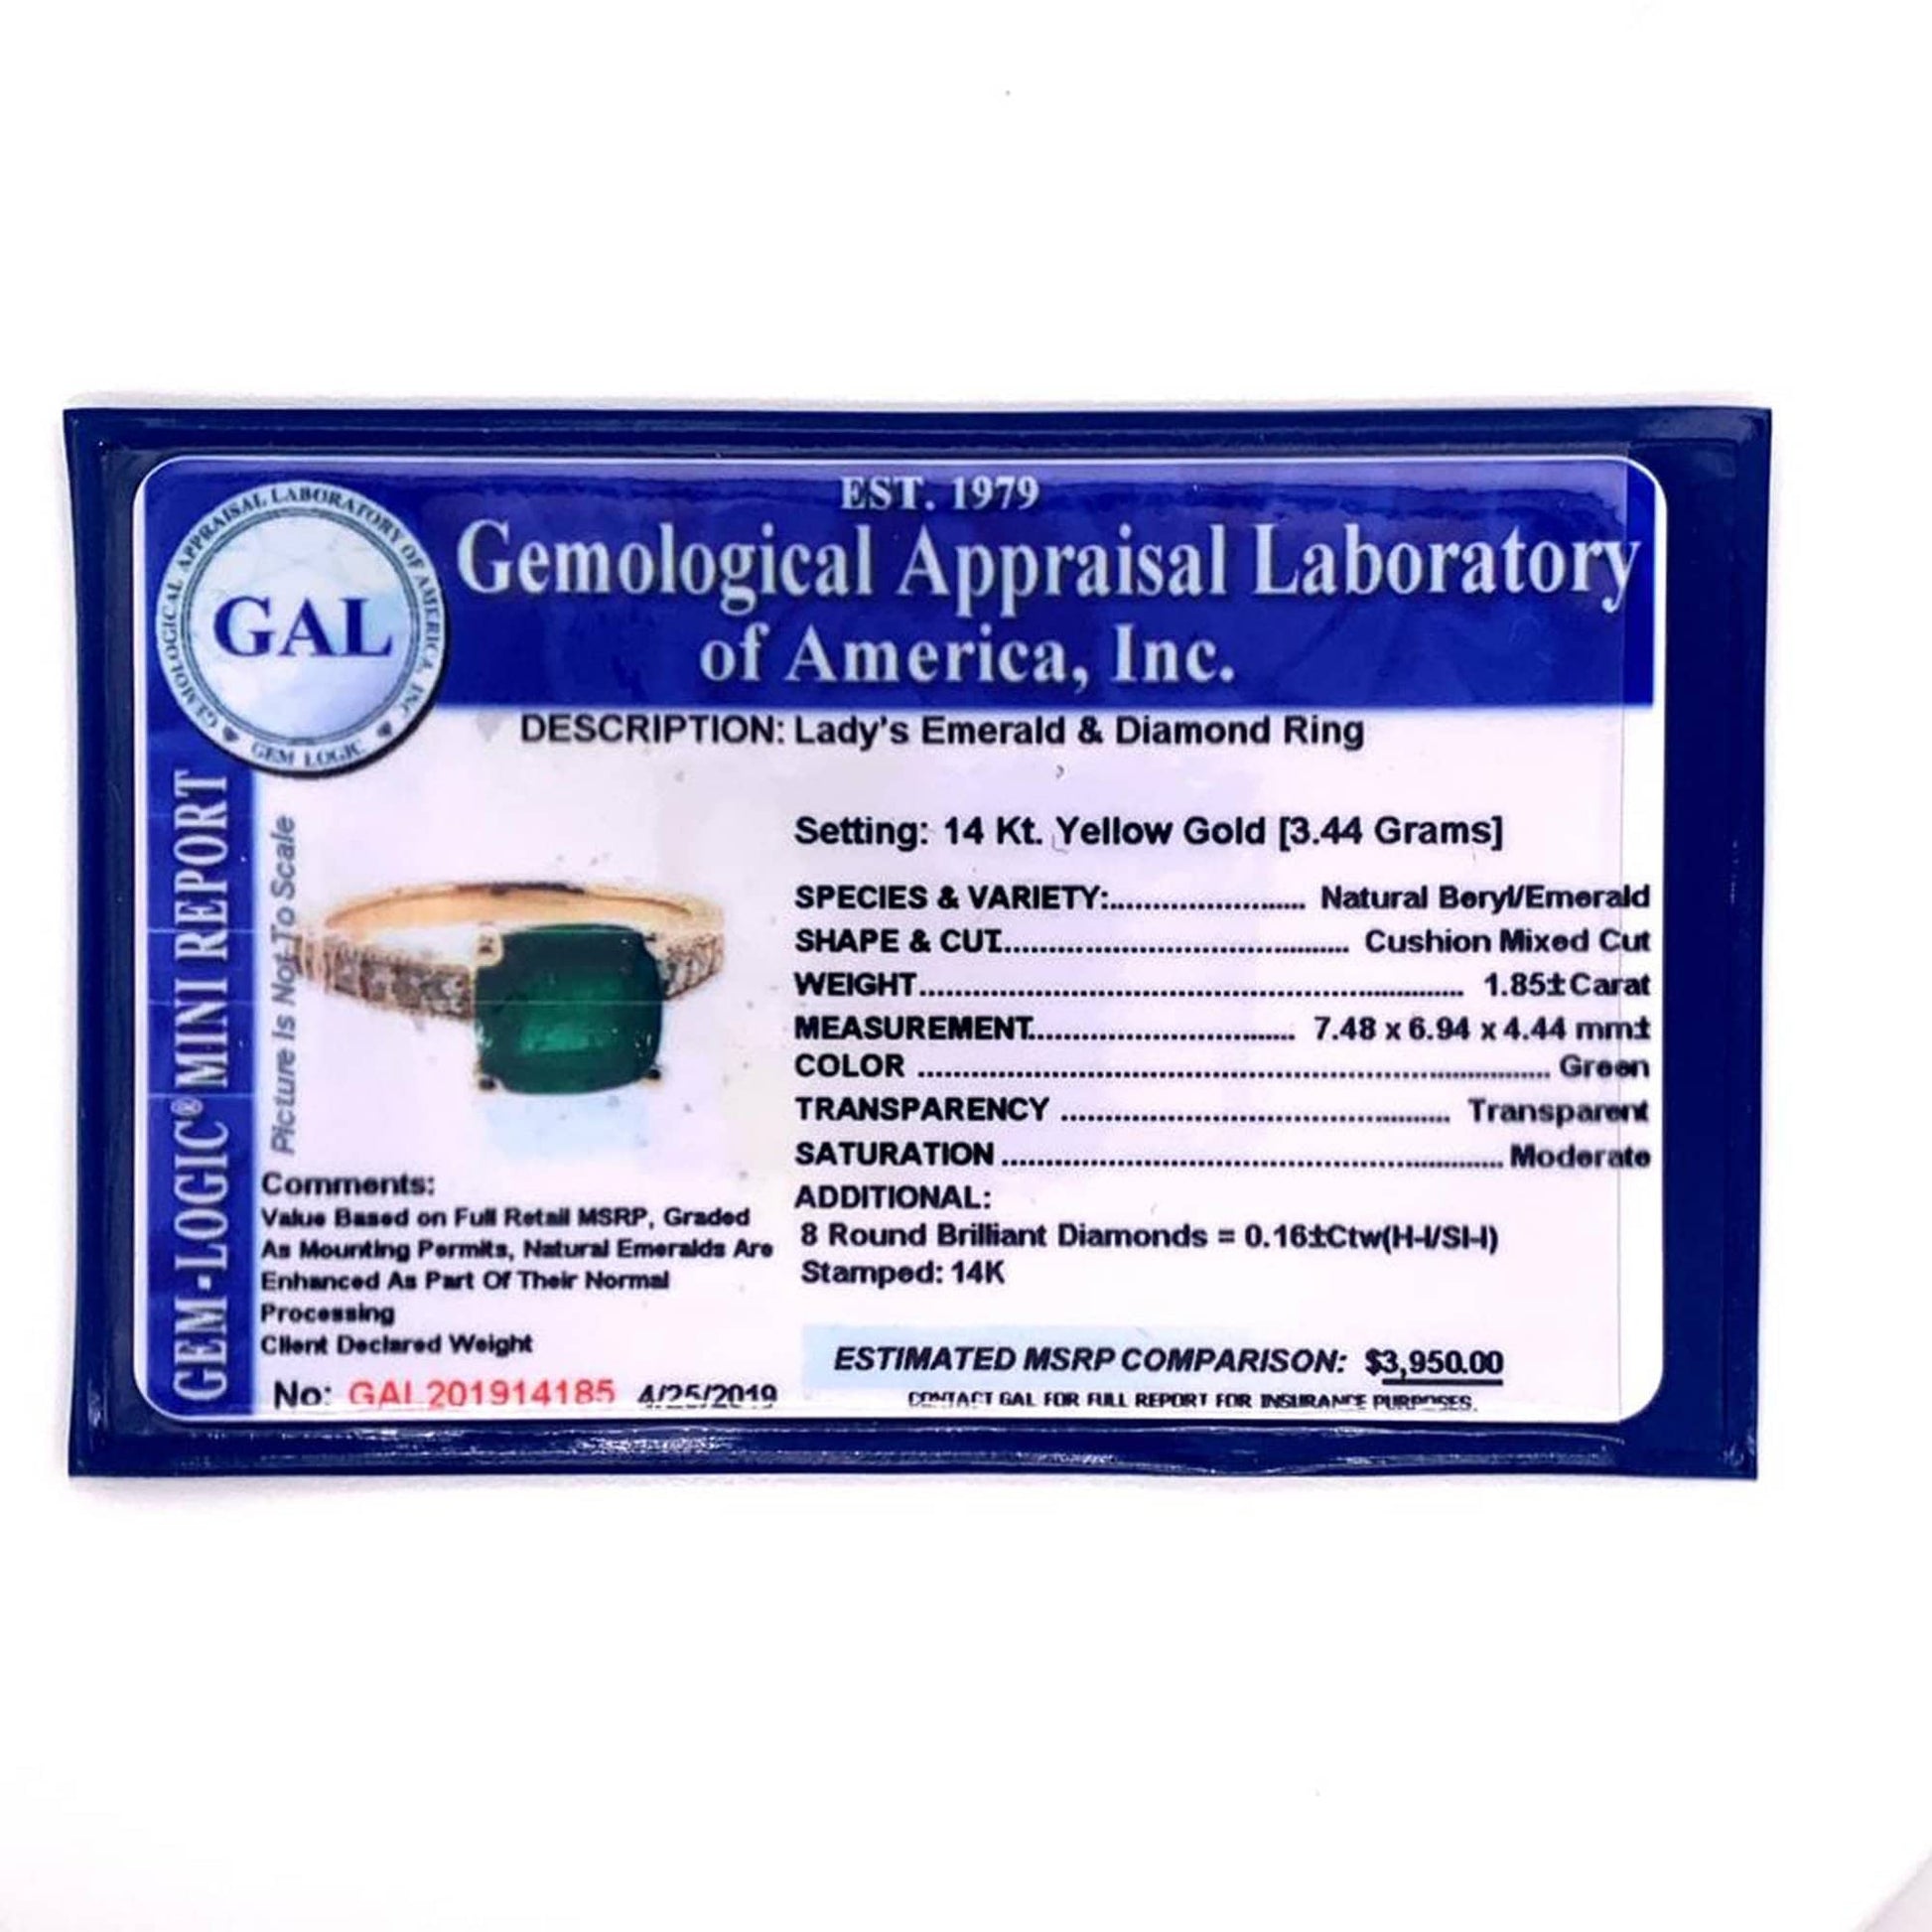 Diamond Emerald Ring 14k Gold 2.01 TCW Women Certified $3,950 914185 - Certified Estate Jewelry